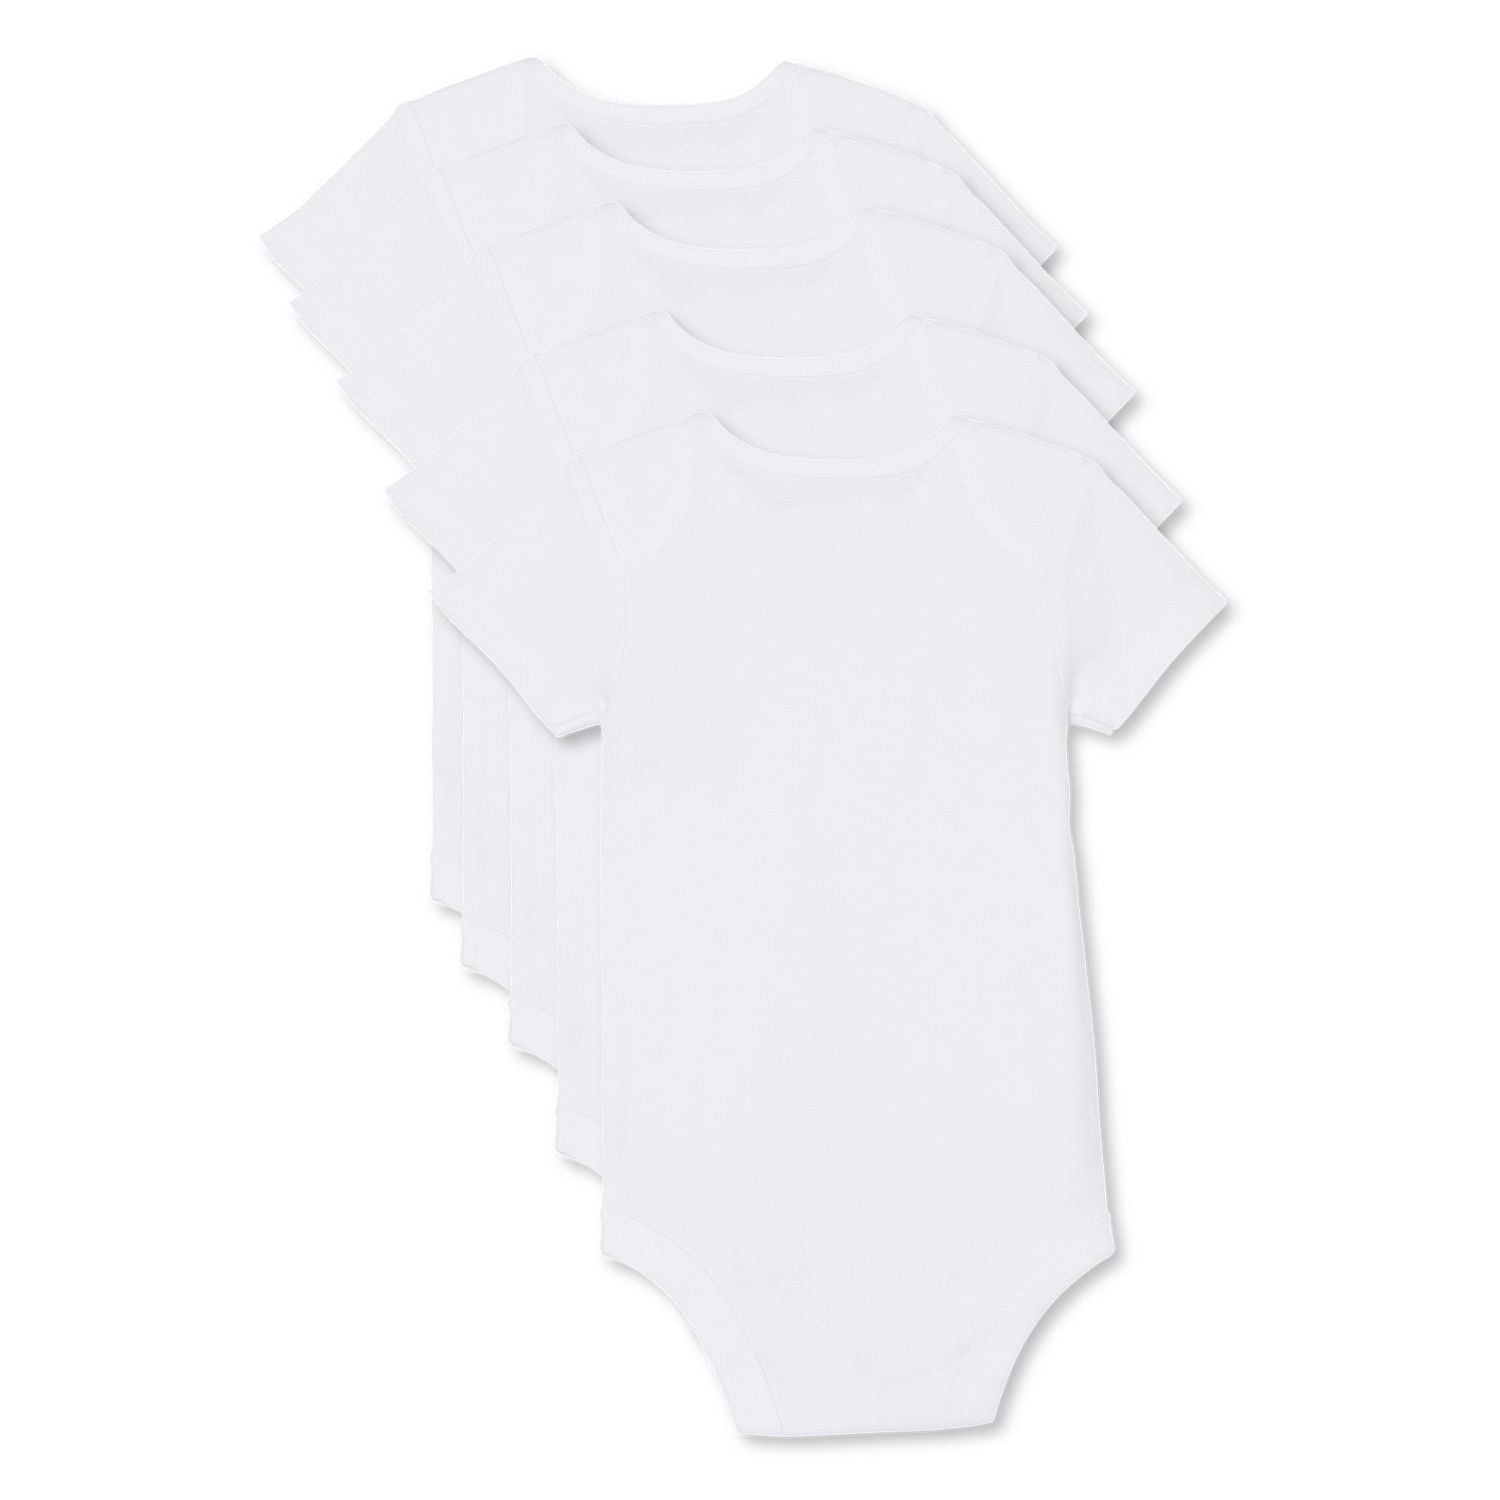 George Infants' Unisex Short Sleeve Bodysuits 5-Pack, Sizes 0-24 months 